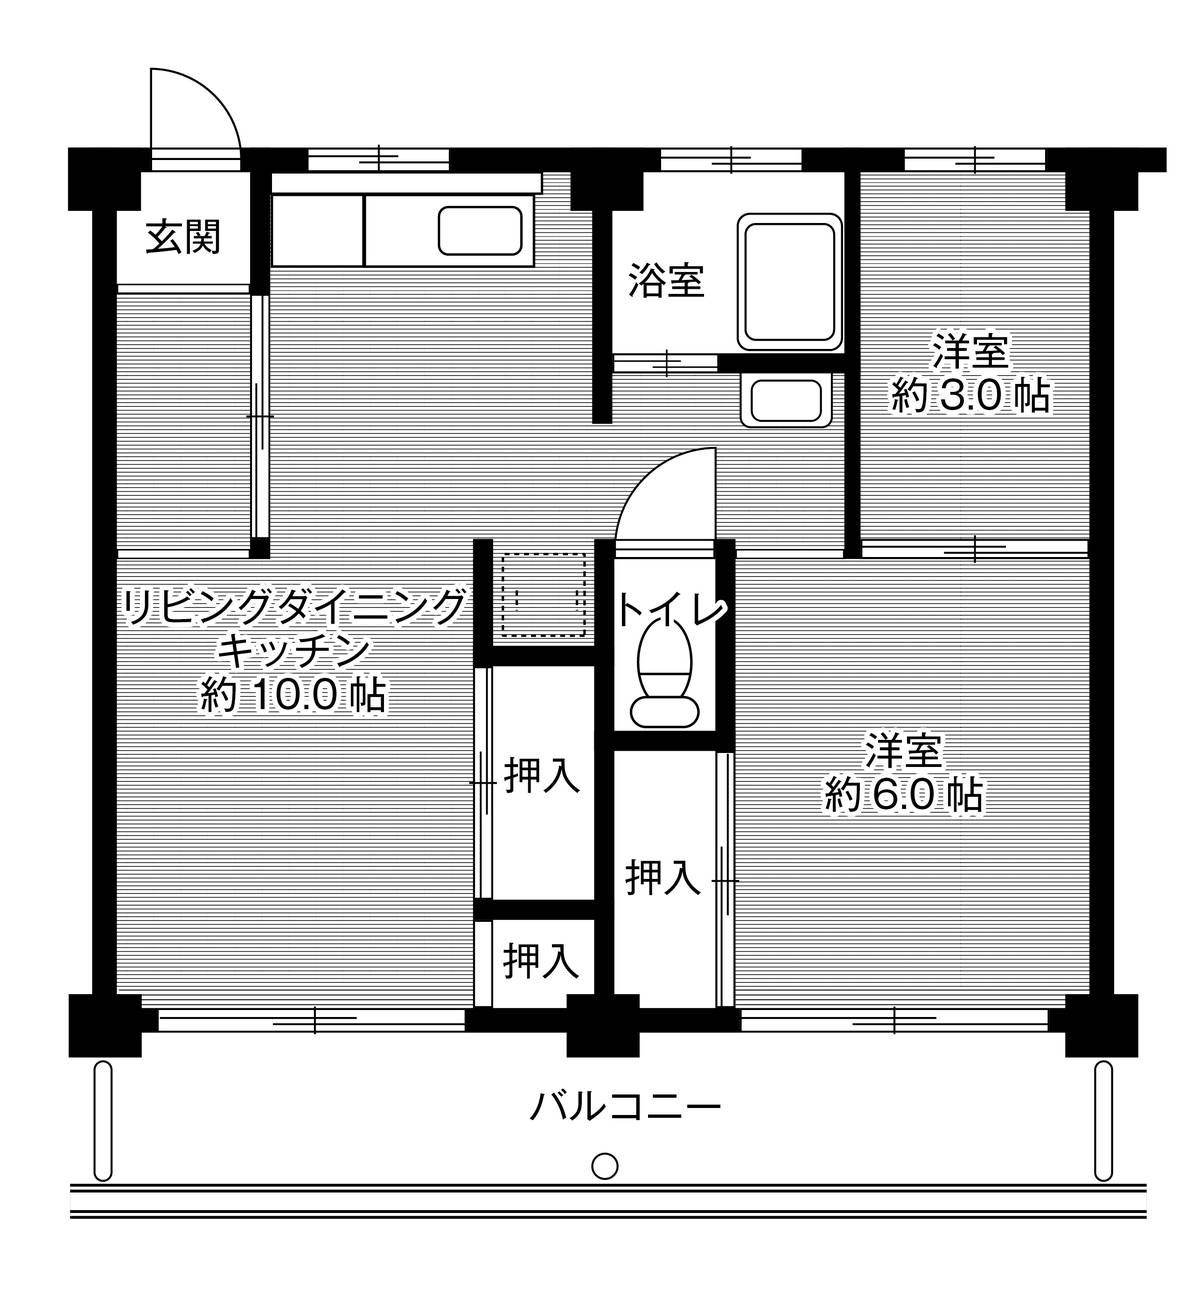 2LDK floorplan of Village House Kakamigahara in Kakamigahara-shi